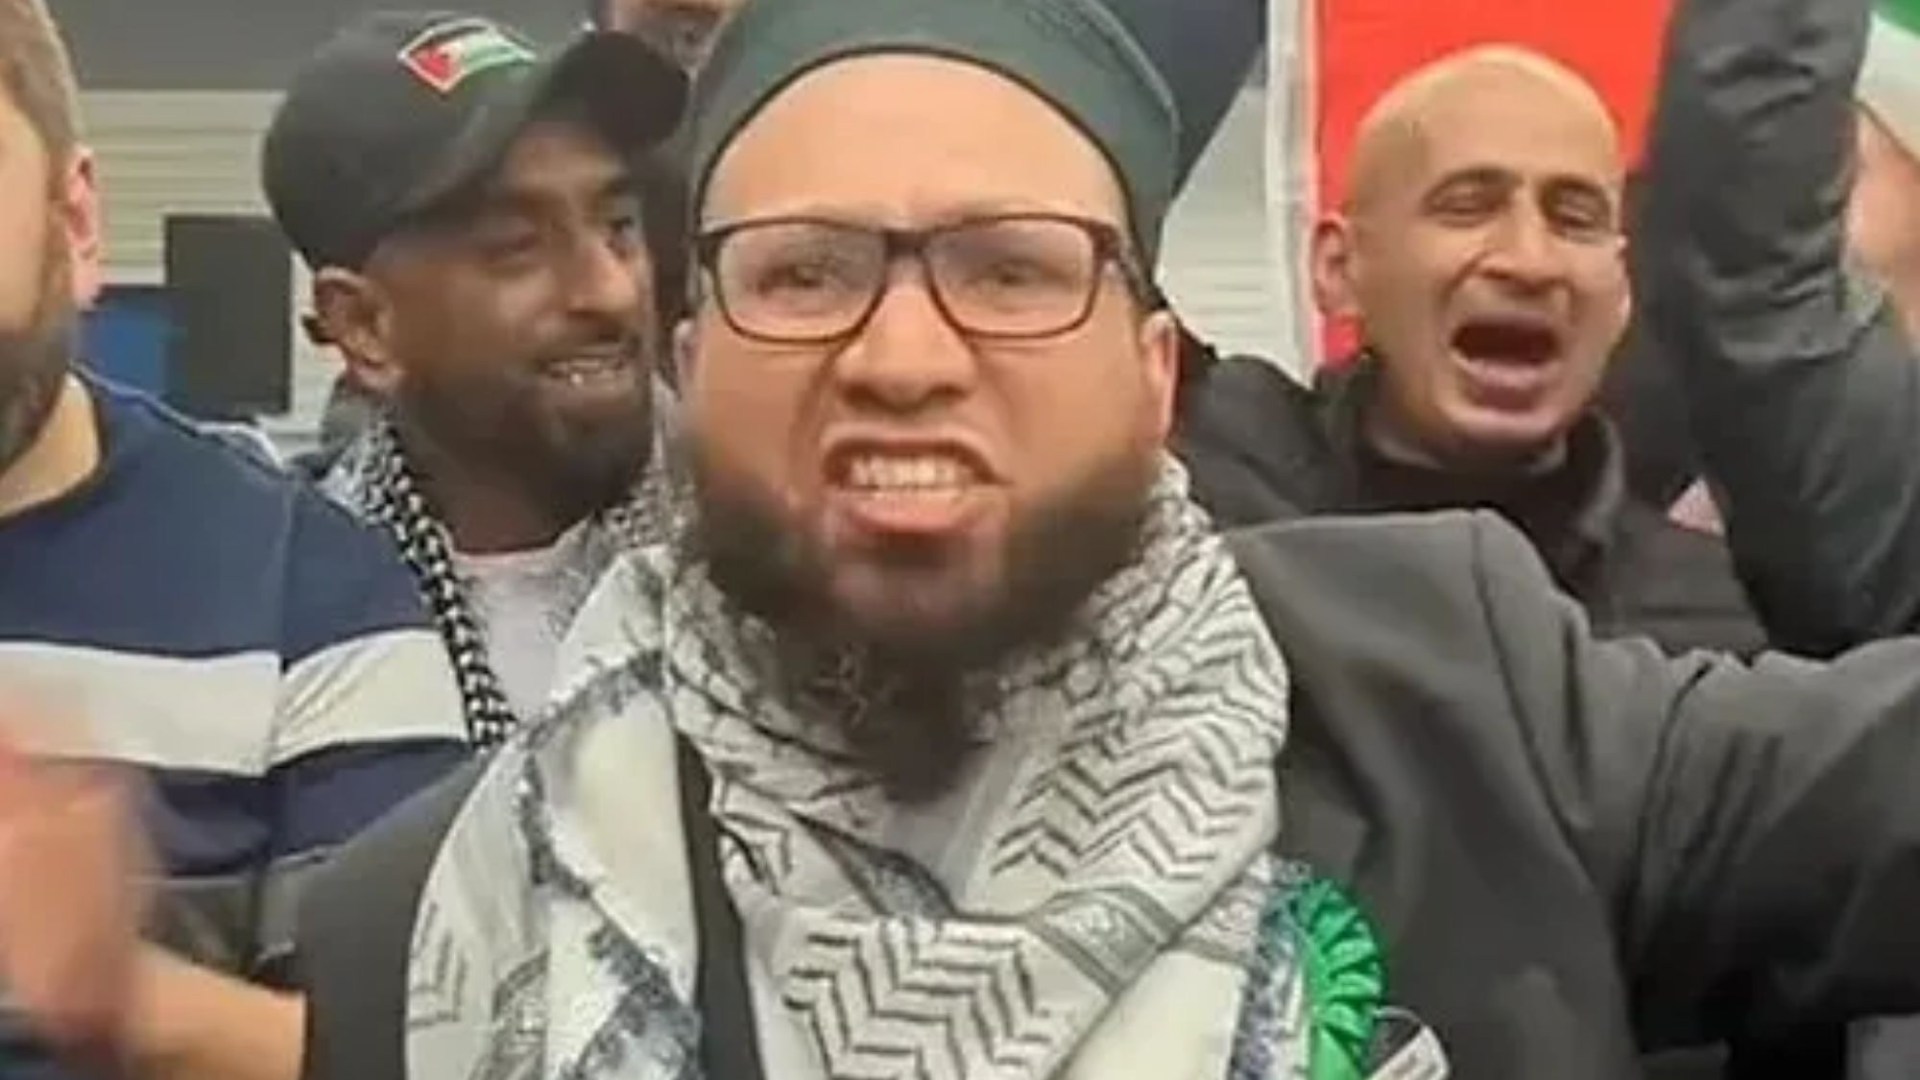 Green councillor who shouted Allahu Akbar after election apologises for Gaza tirade but keeps job [Video]